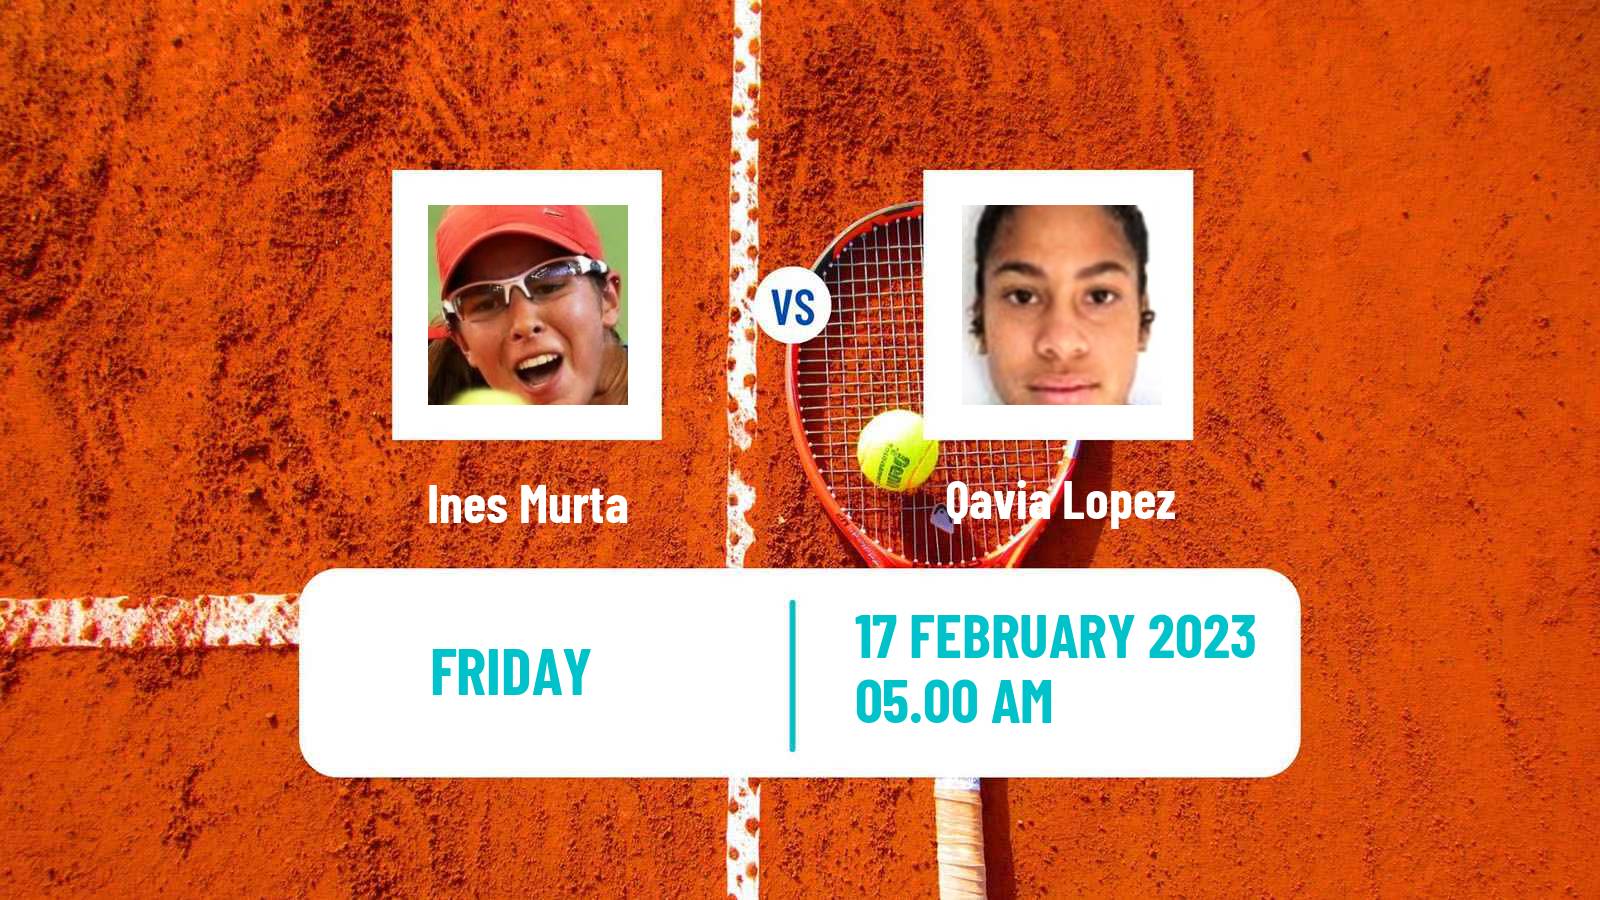 Tennis ITF Tournaments Ines Murta - Qavia Lopez